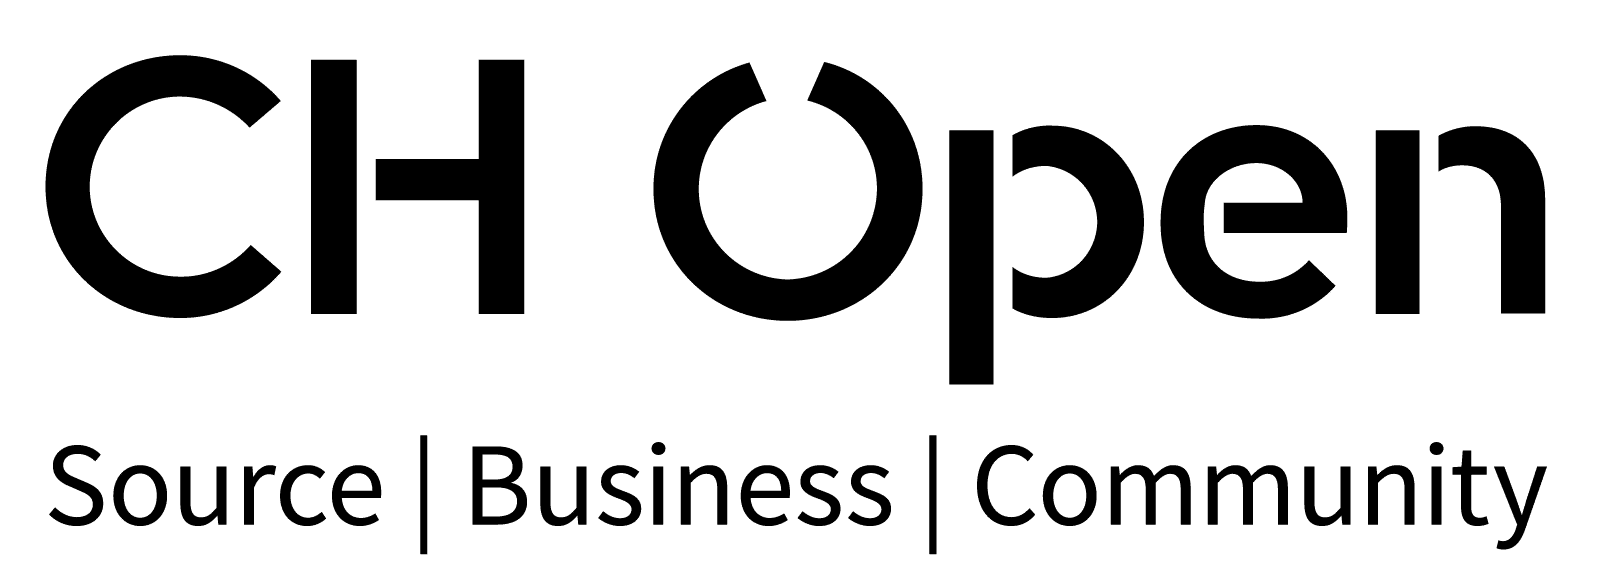 Mitgliedschaft CH-Open Opensource